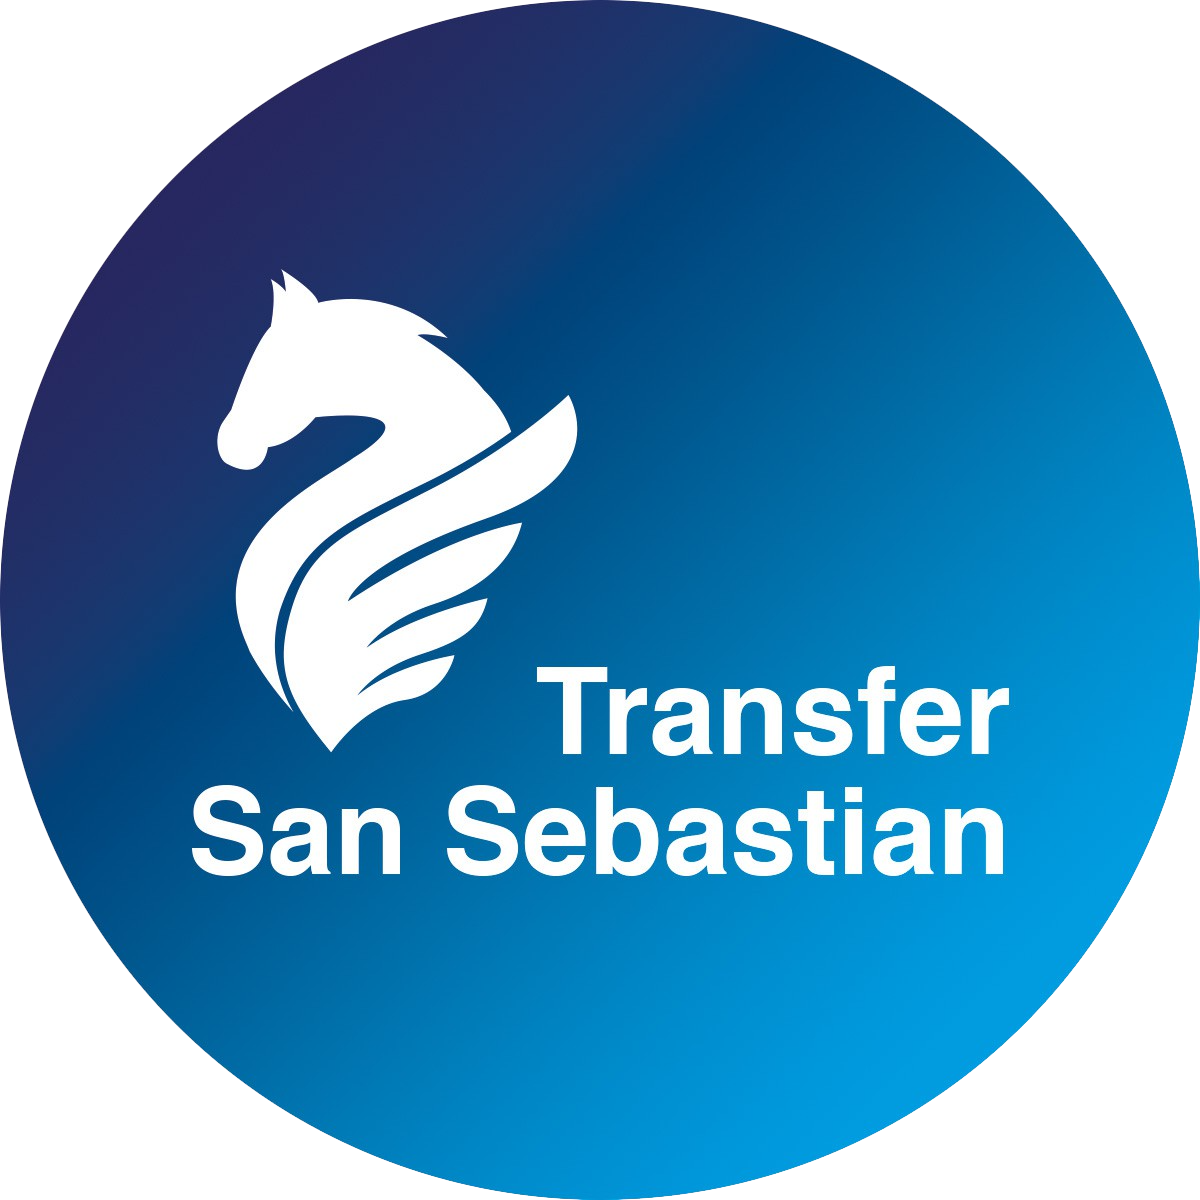 Transfer San Sebastian